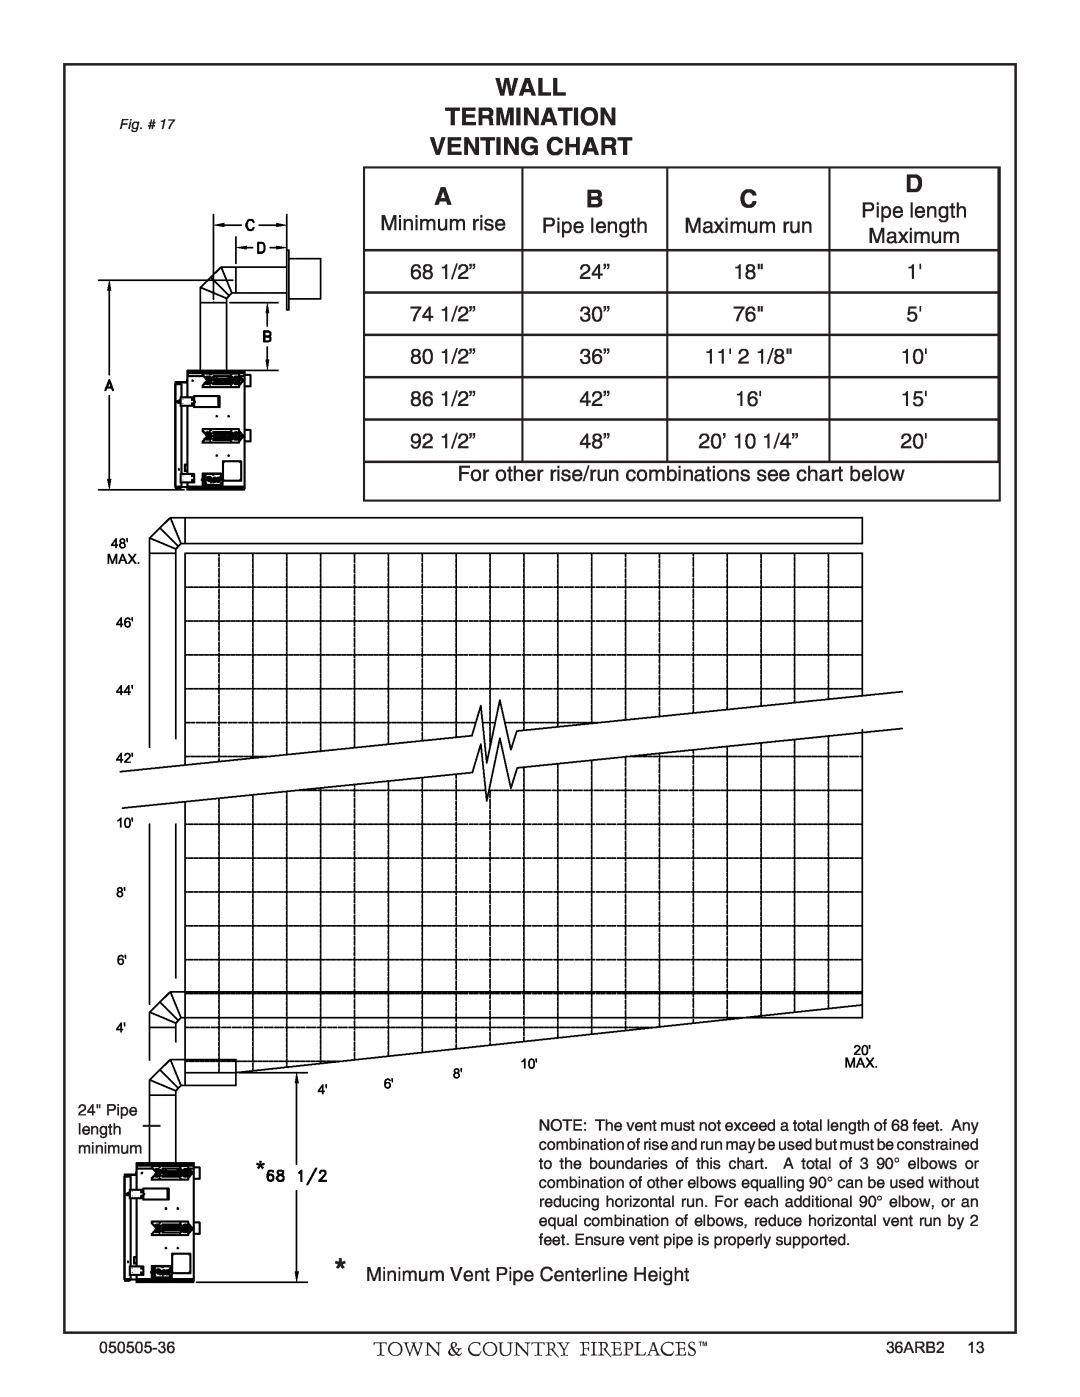 PGS TC36 AR manual Wall, Termination, Venting Chart 